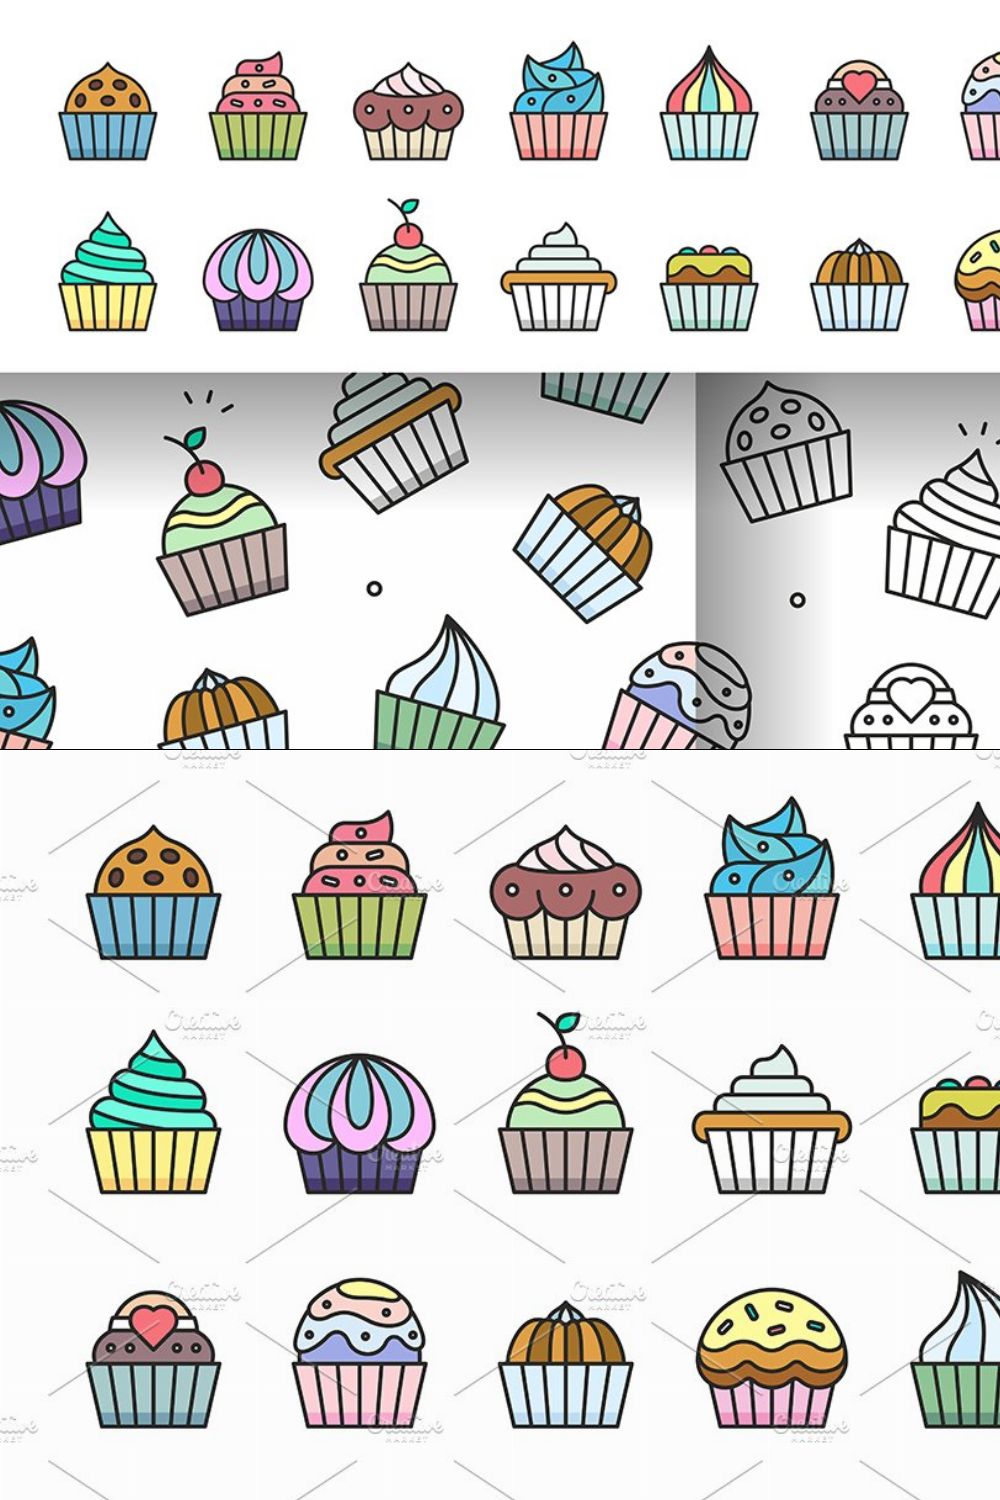 Cupcakes Set + pattern pinterest preview image.